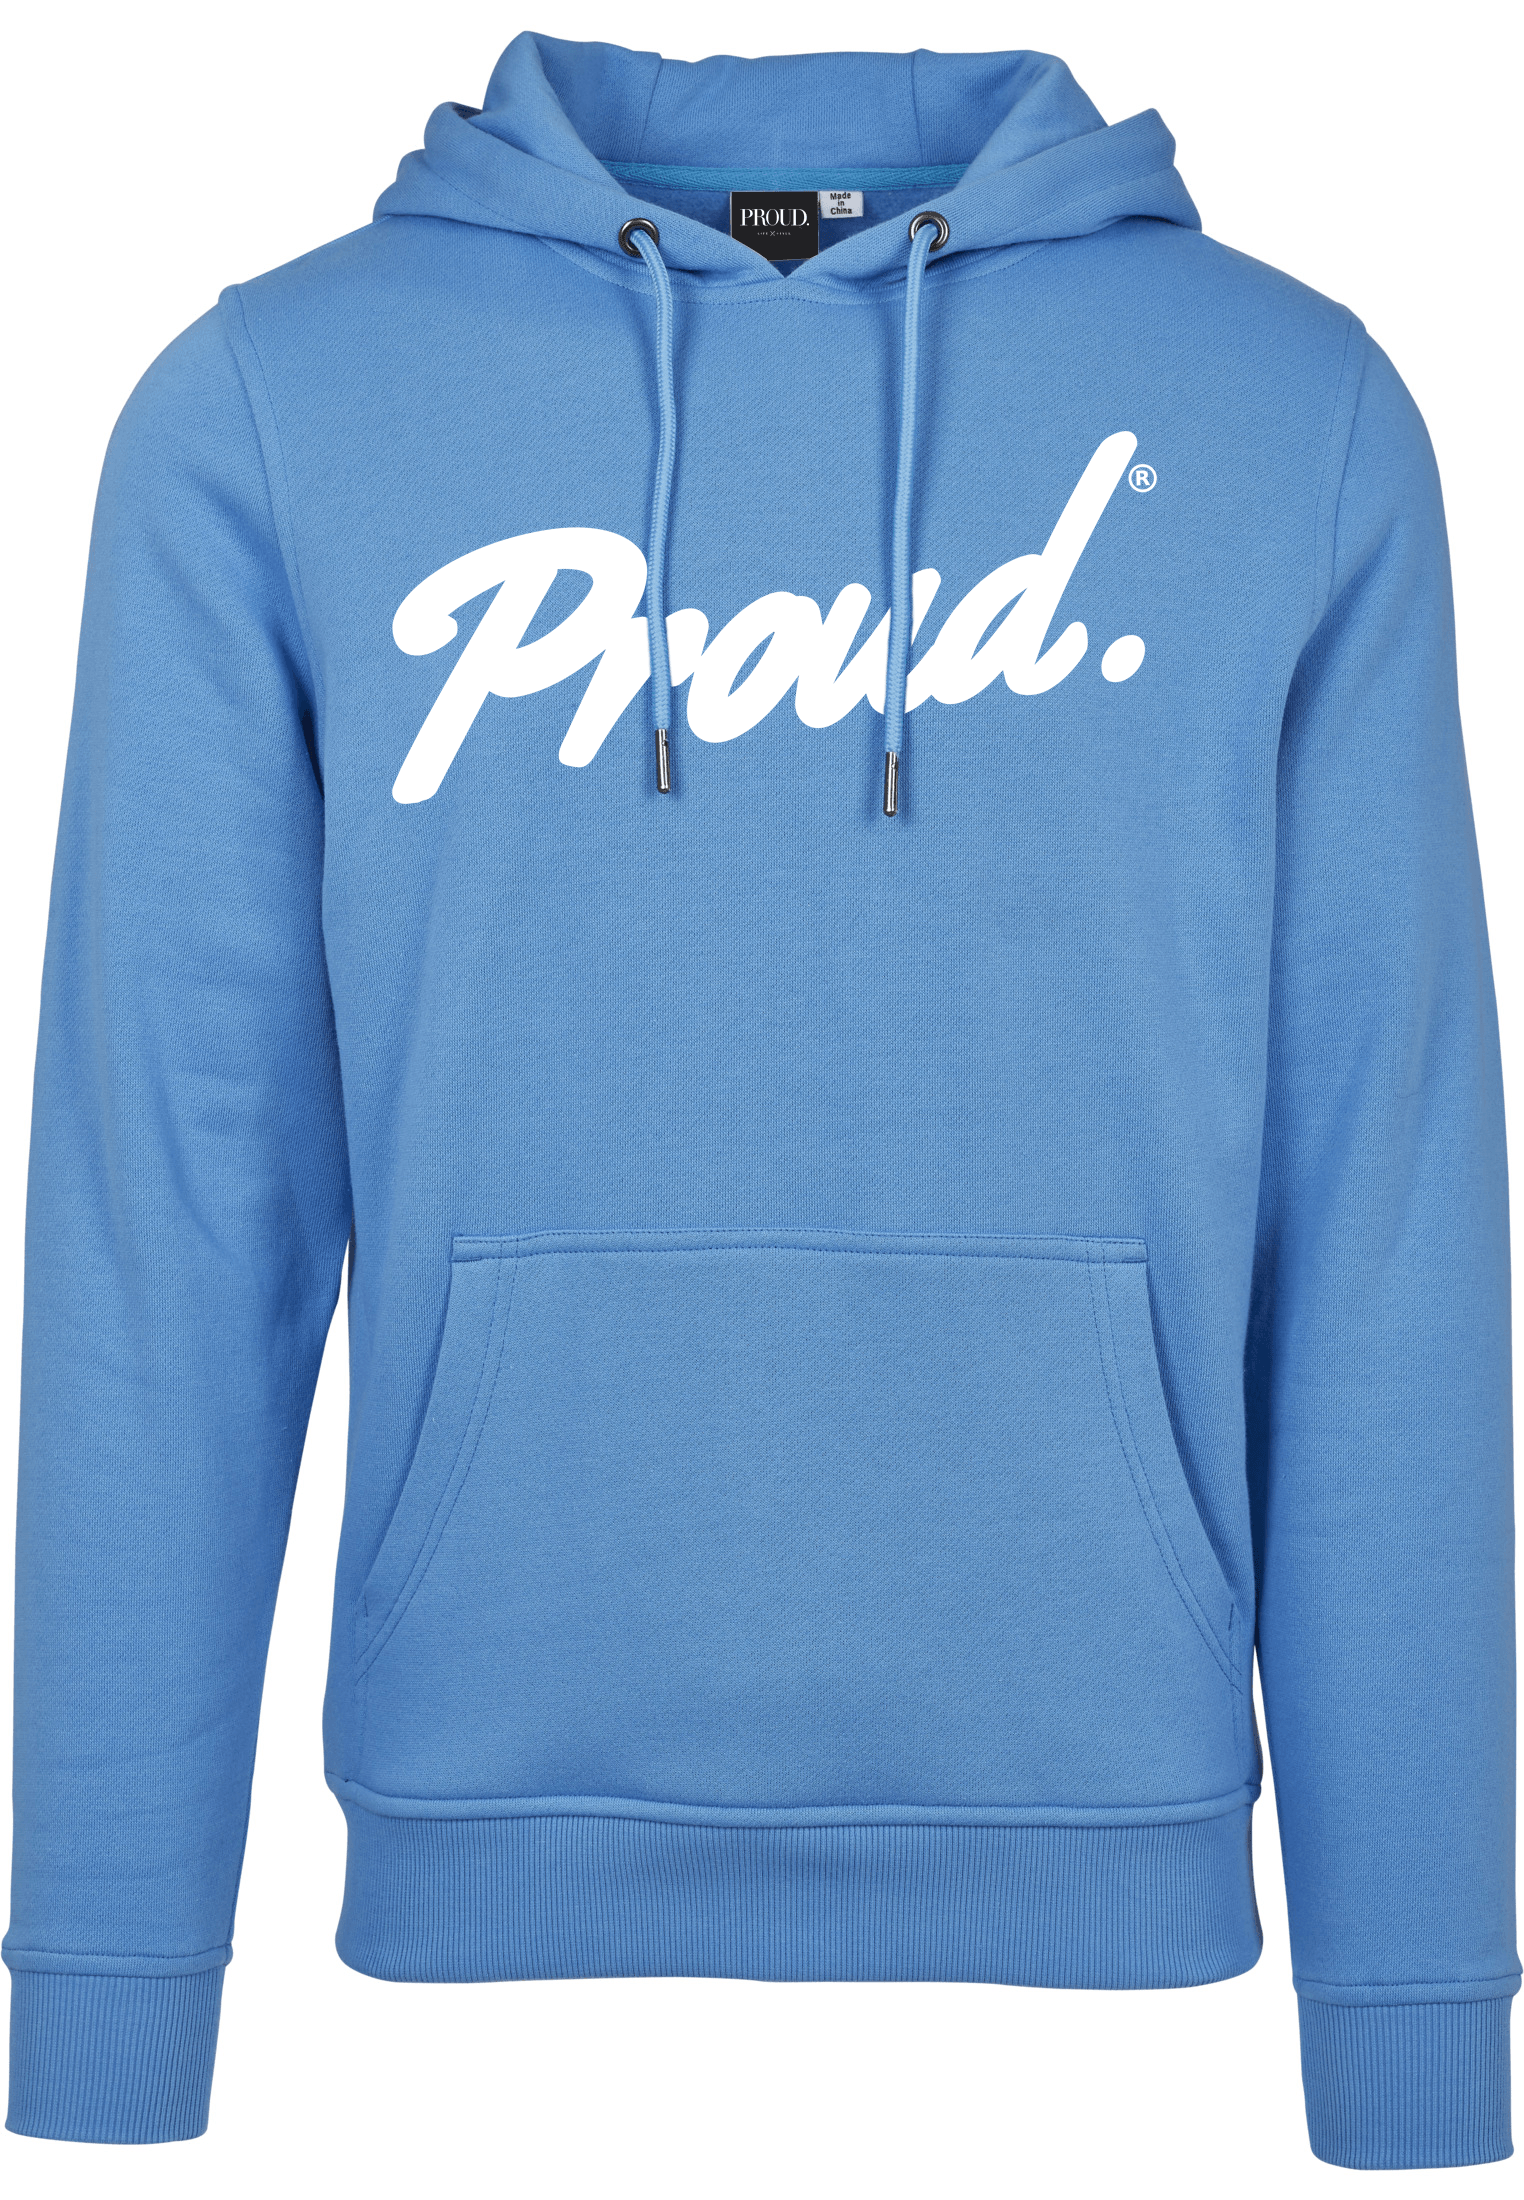 Horizon Blue Logo - PROUD. Script Logo 'Hooded Sweater' Horizon Blue - PROUD.